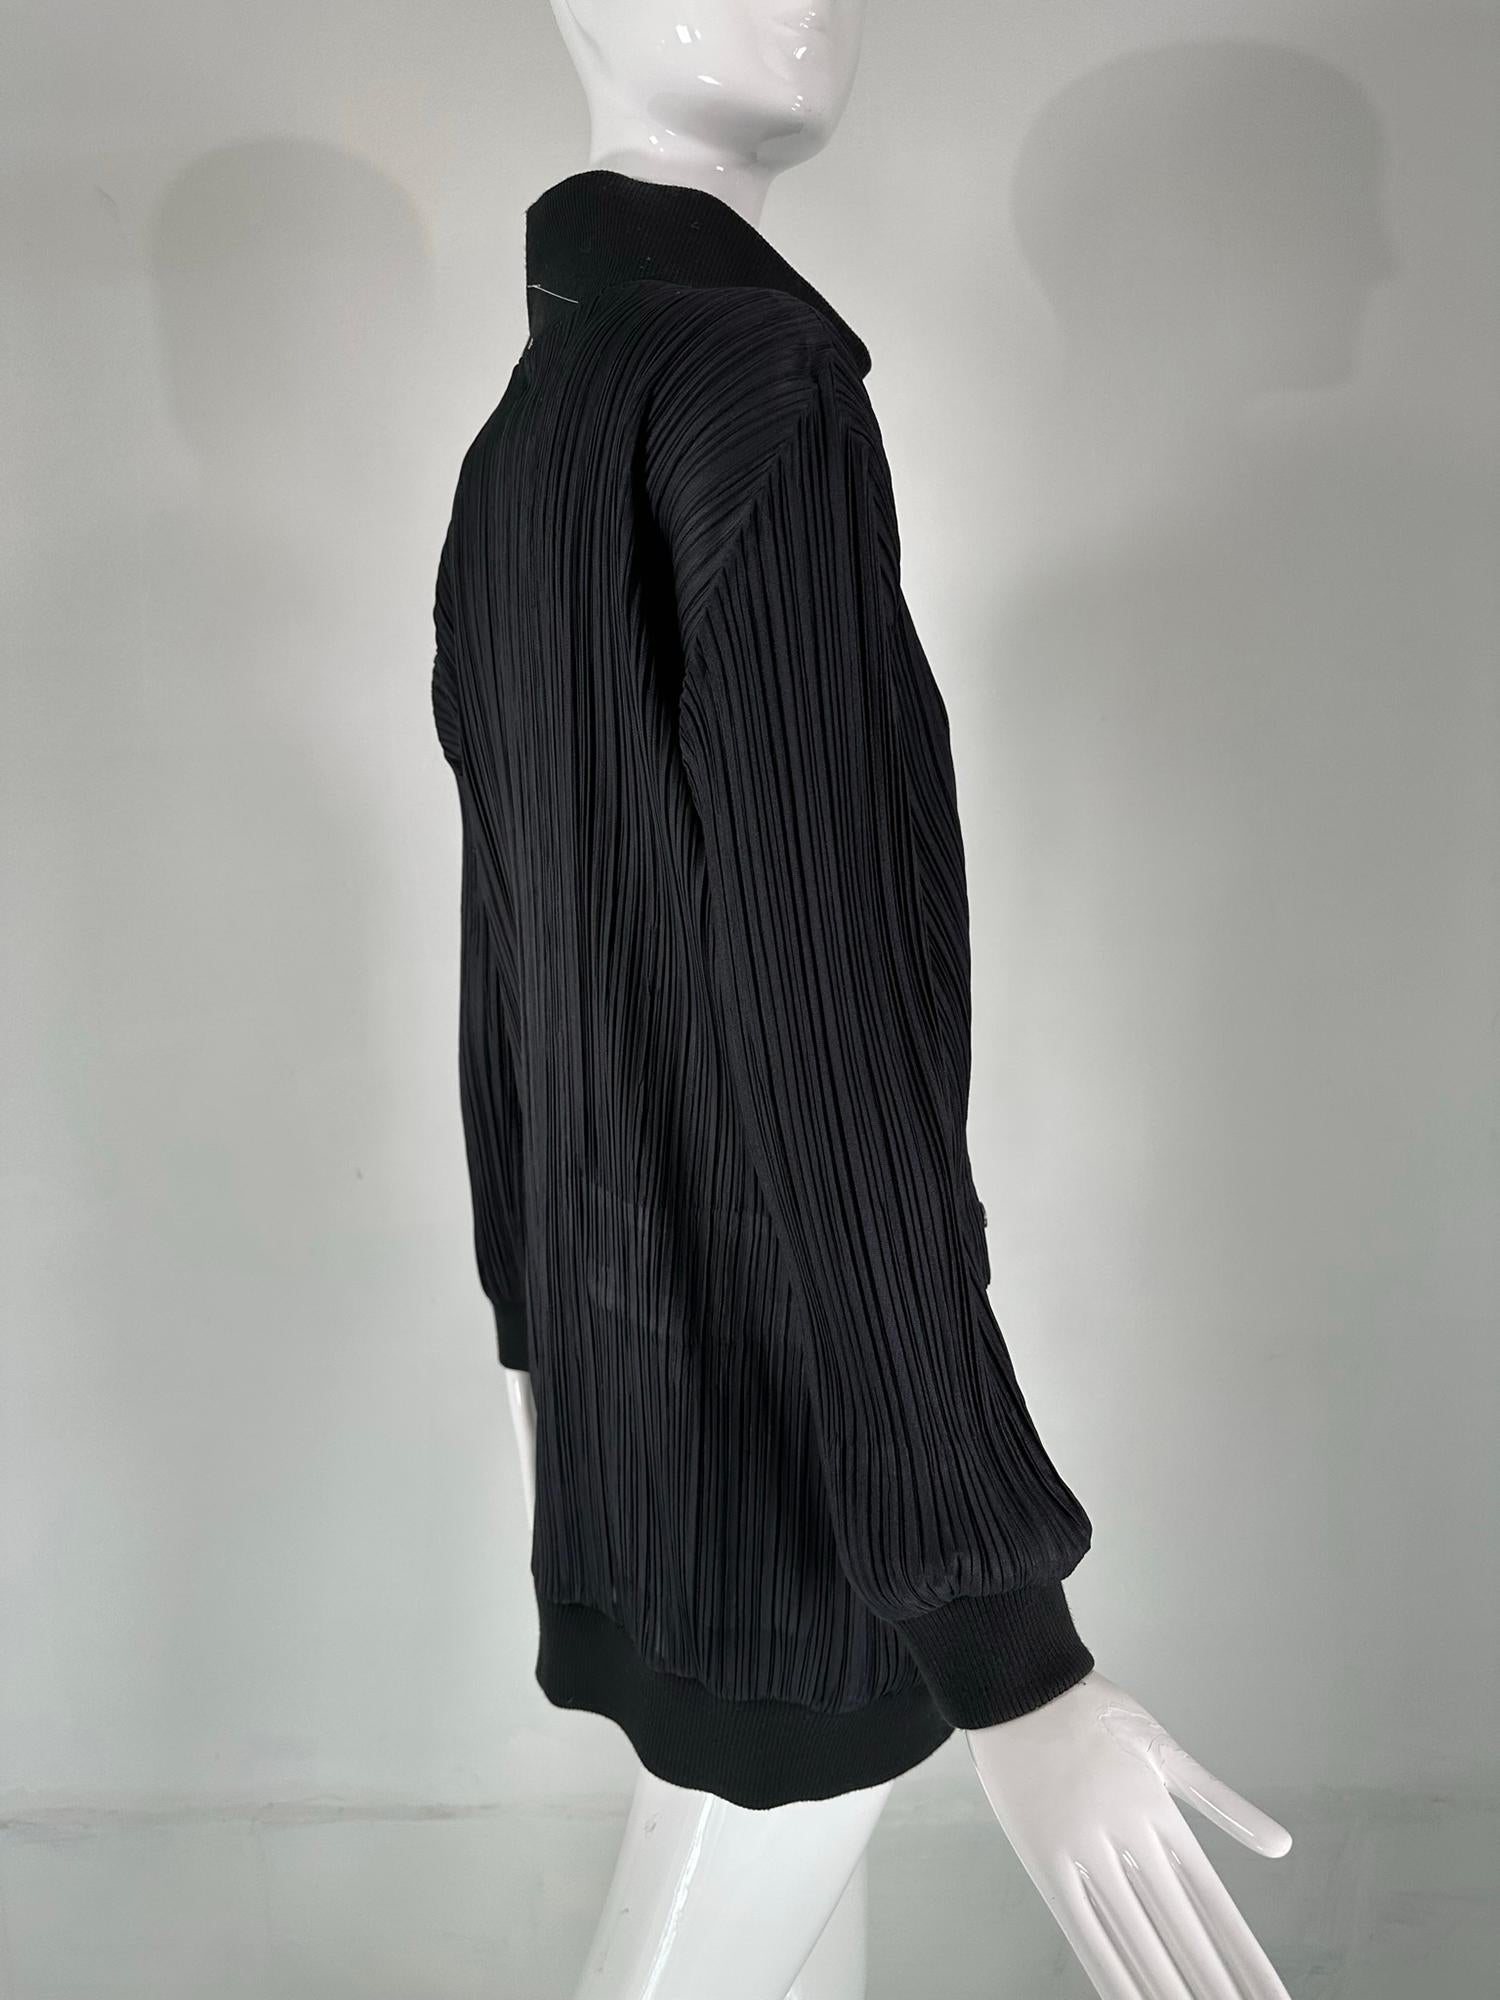 Issey Miyake Pleats Please Black Funnel Neck Hidden Zipper Front Long Jacket 3 For Sale 5